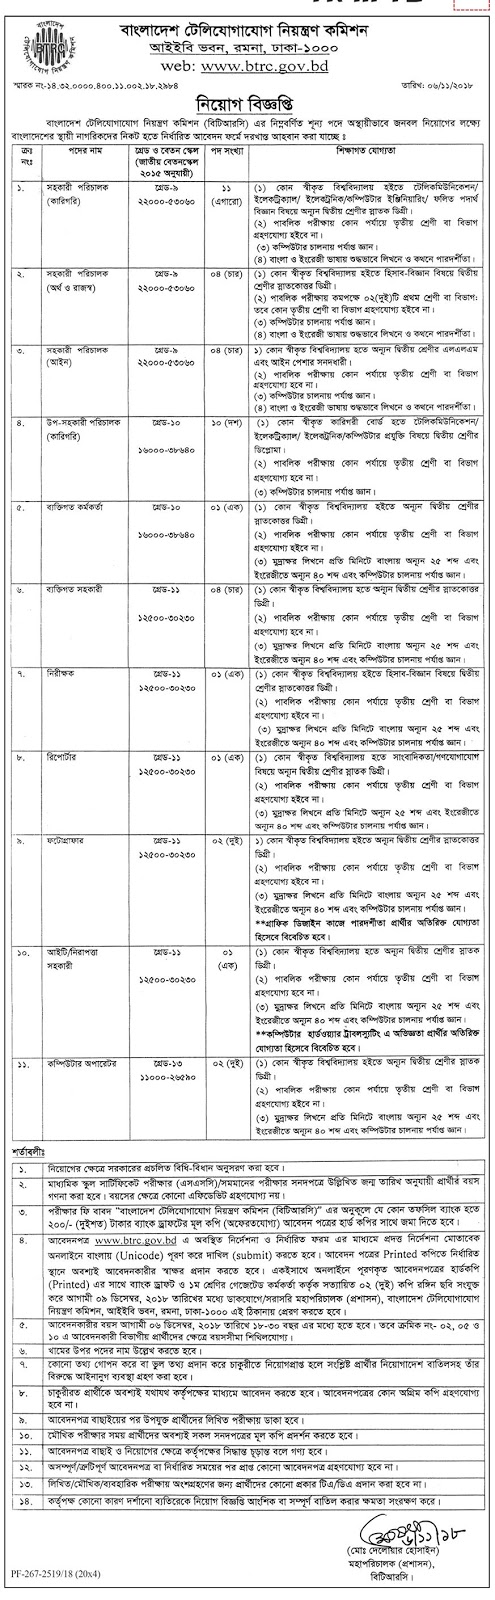 Bangladesh Telecommunication Regulatory Commission (BTRC) Job Circular 2018